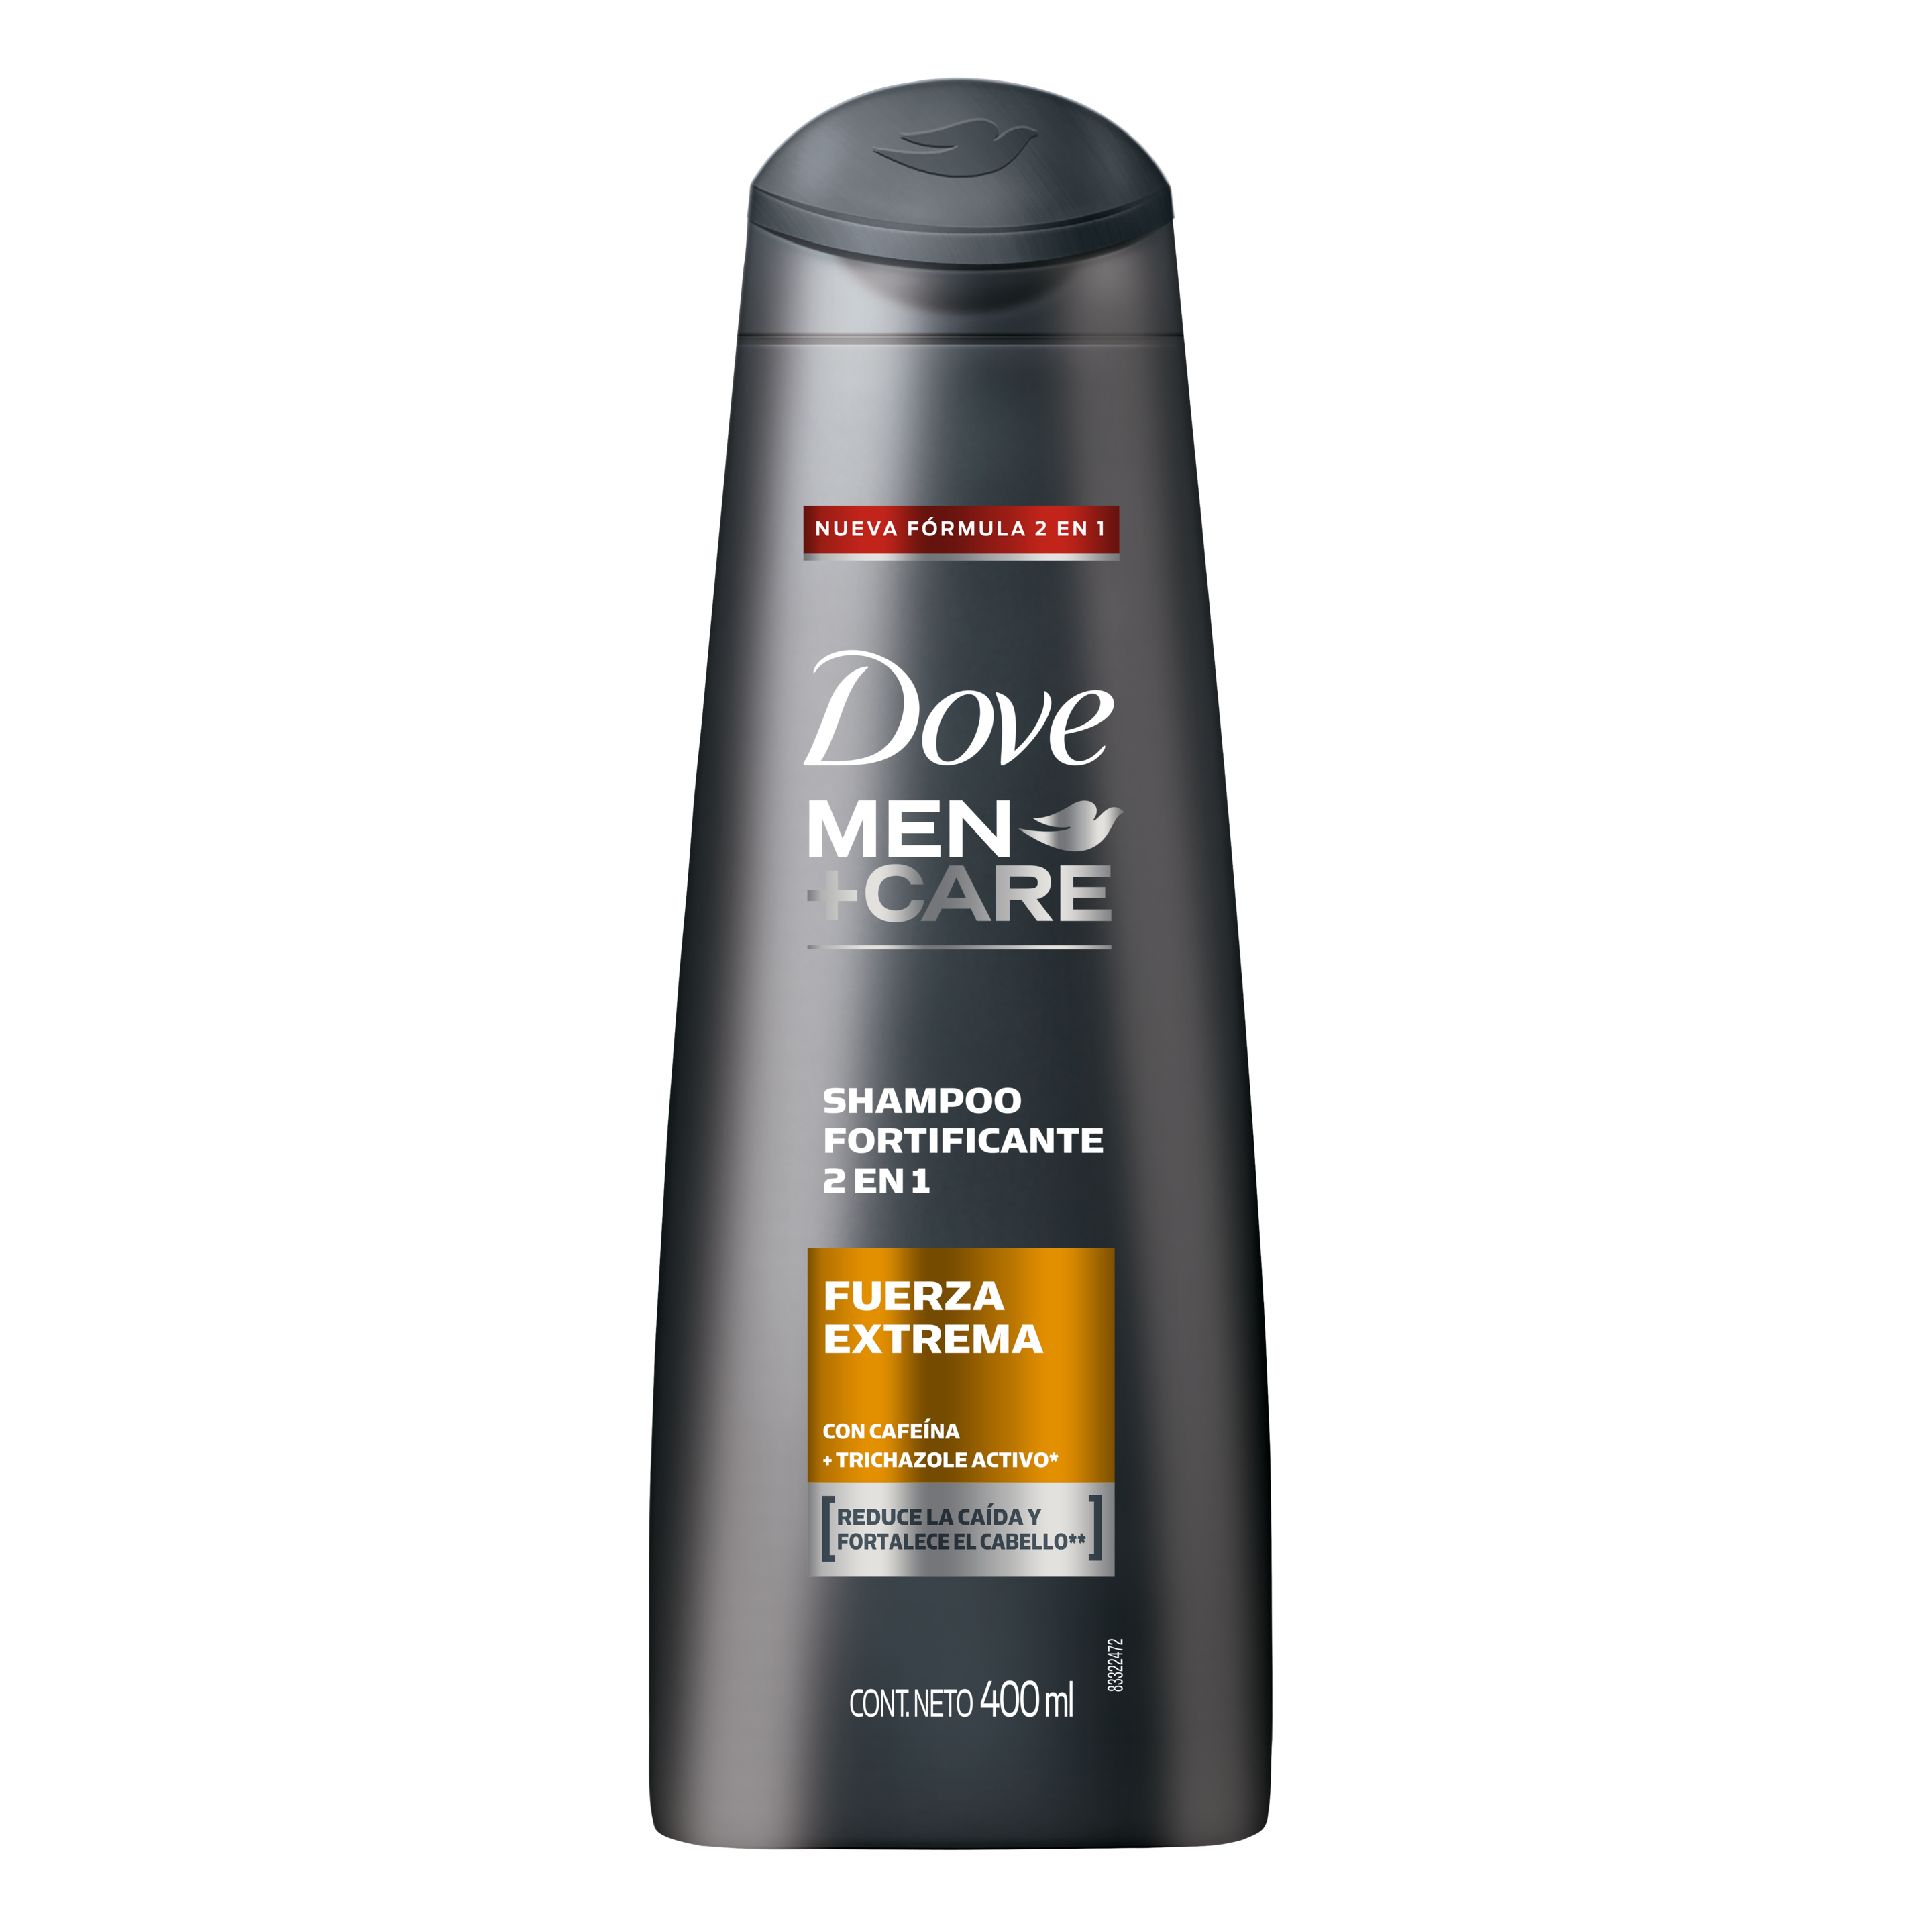 Dove Men+Care Shampoo 2 en 1 Fuerza Extrema 400ml